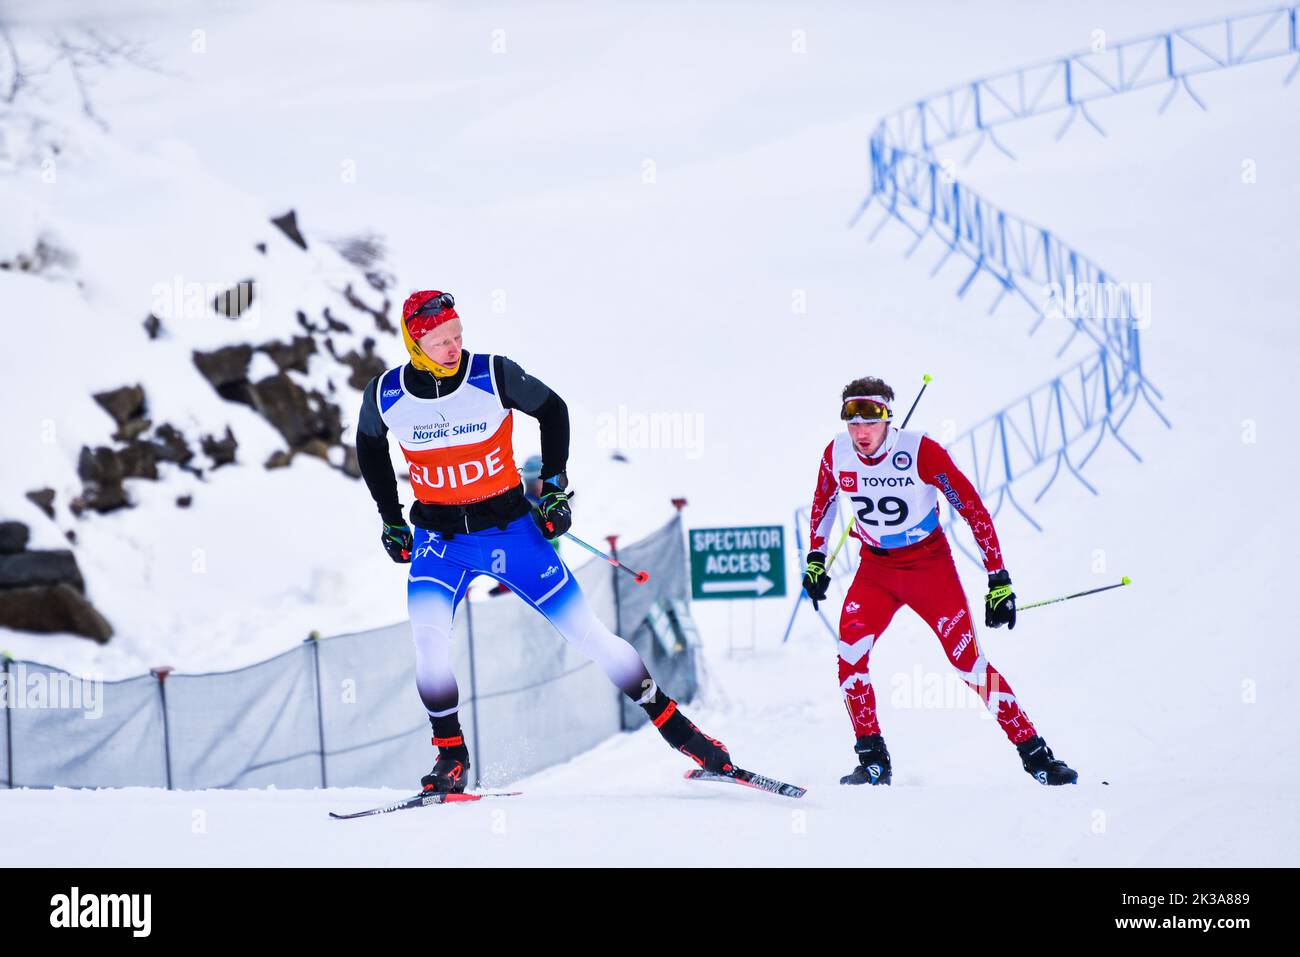 Der Guide leitet den kanadischen Jesse Bachinsky, 2019 U.S. Paralympic National Cross Country Ski Championships, Craftsbury Outdoor Center, VT, USA. Stockfoto